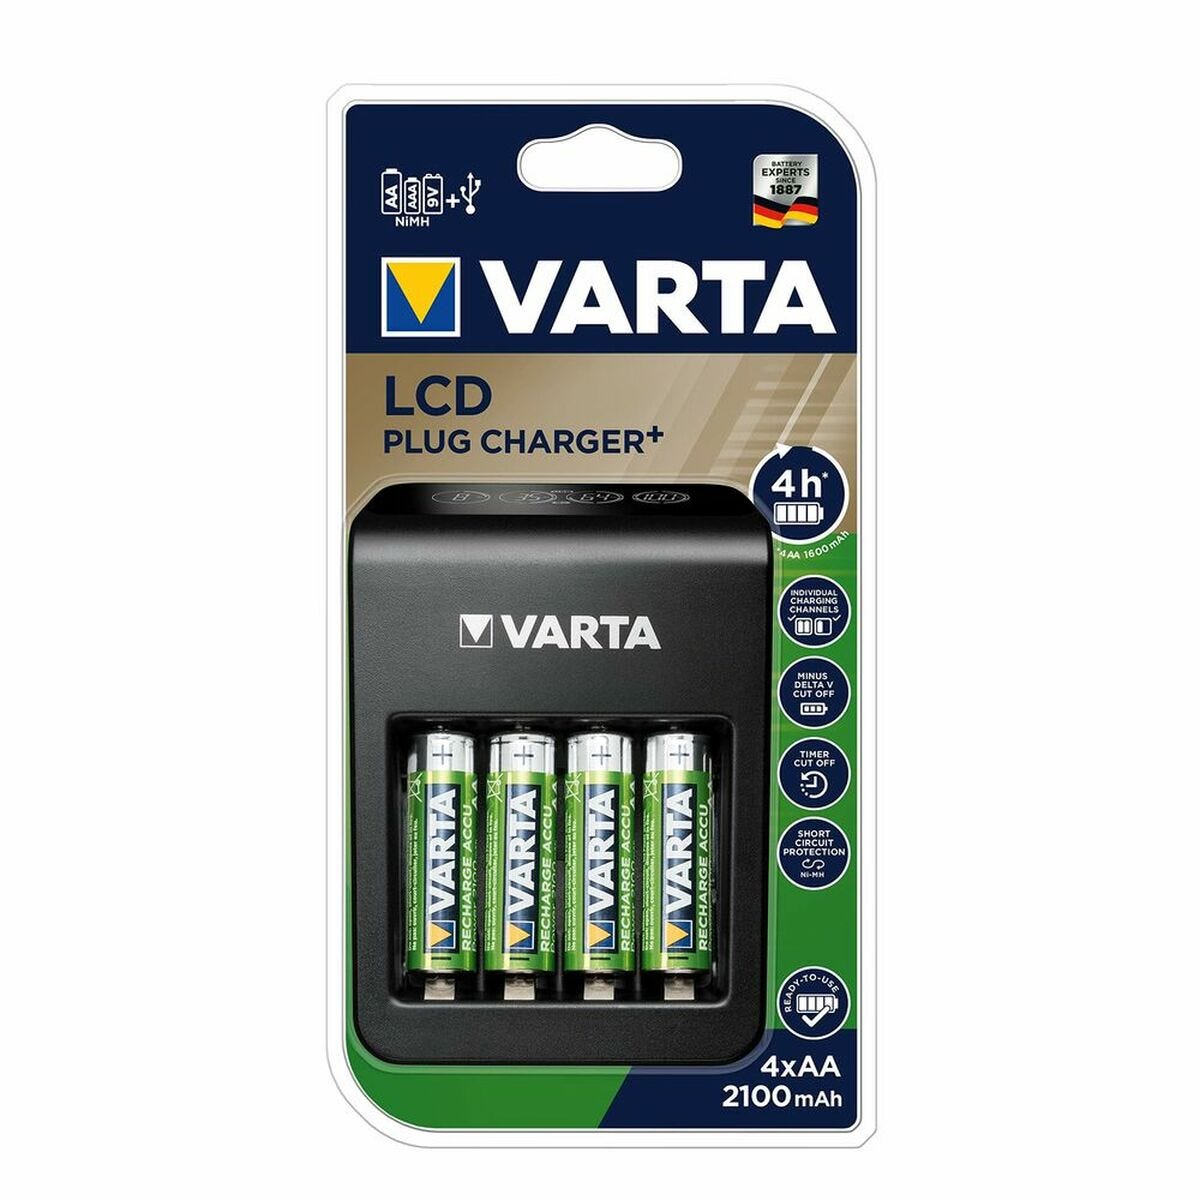 Chargeur de piles rondes Varta LCD Plug Charger+ 4x 56706 avec accus NiMH LR03 (AAA), LR6 (AA), 6LR61 (9 V) 4